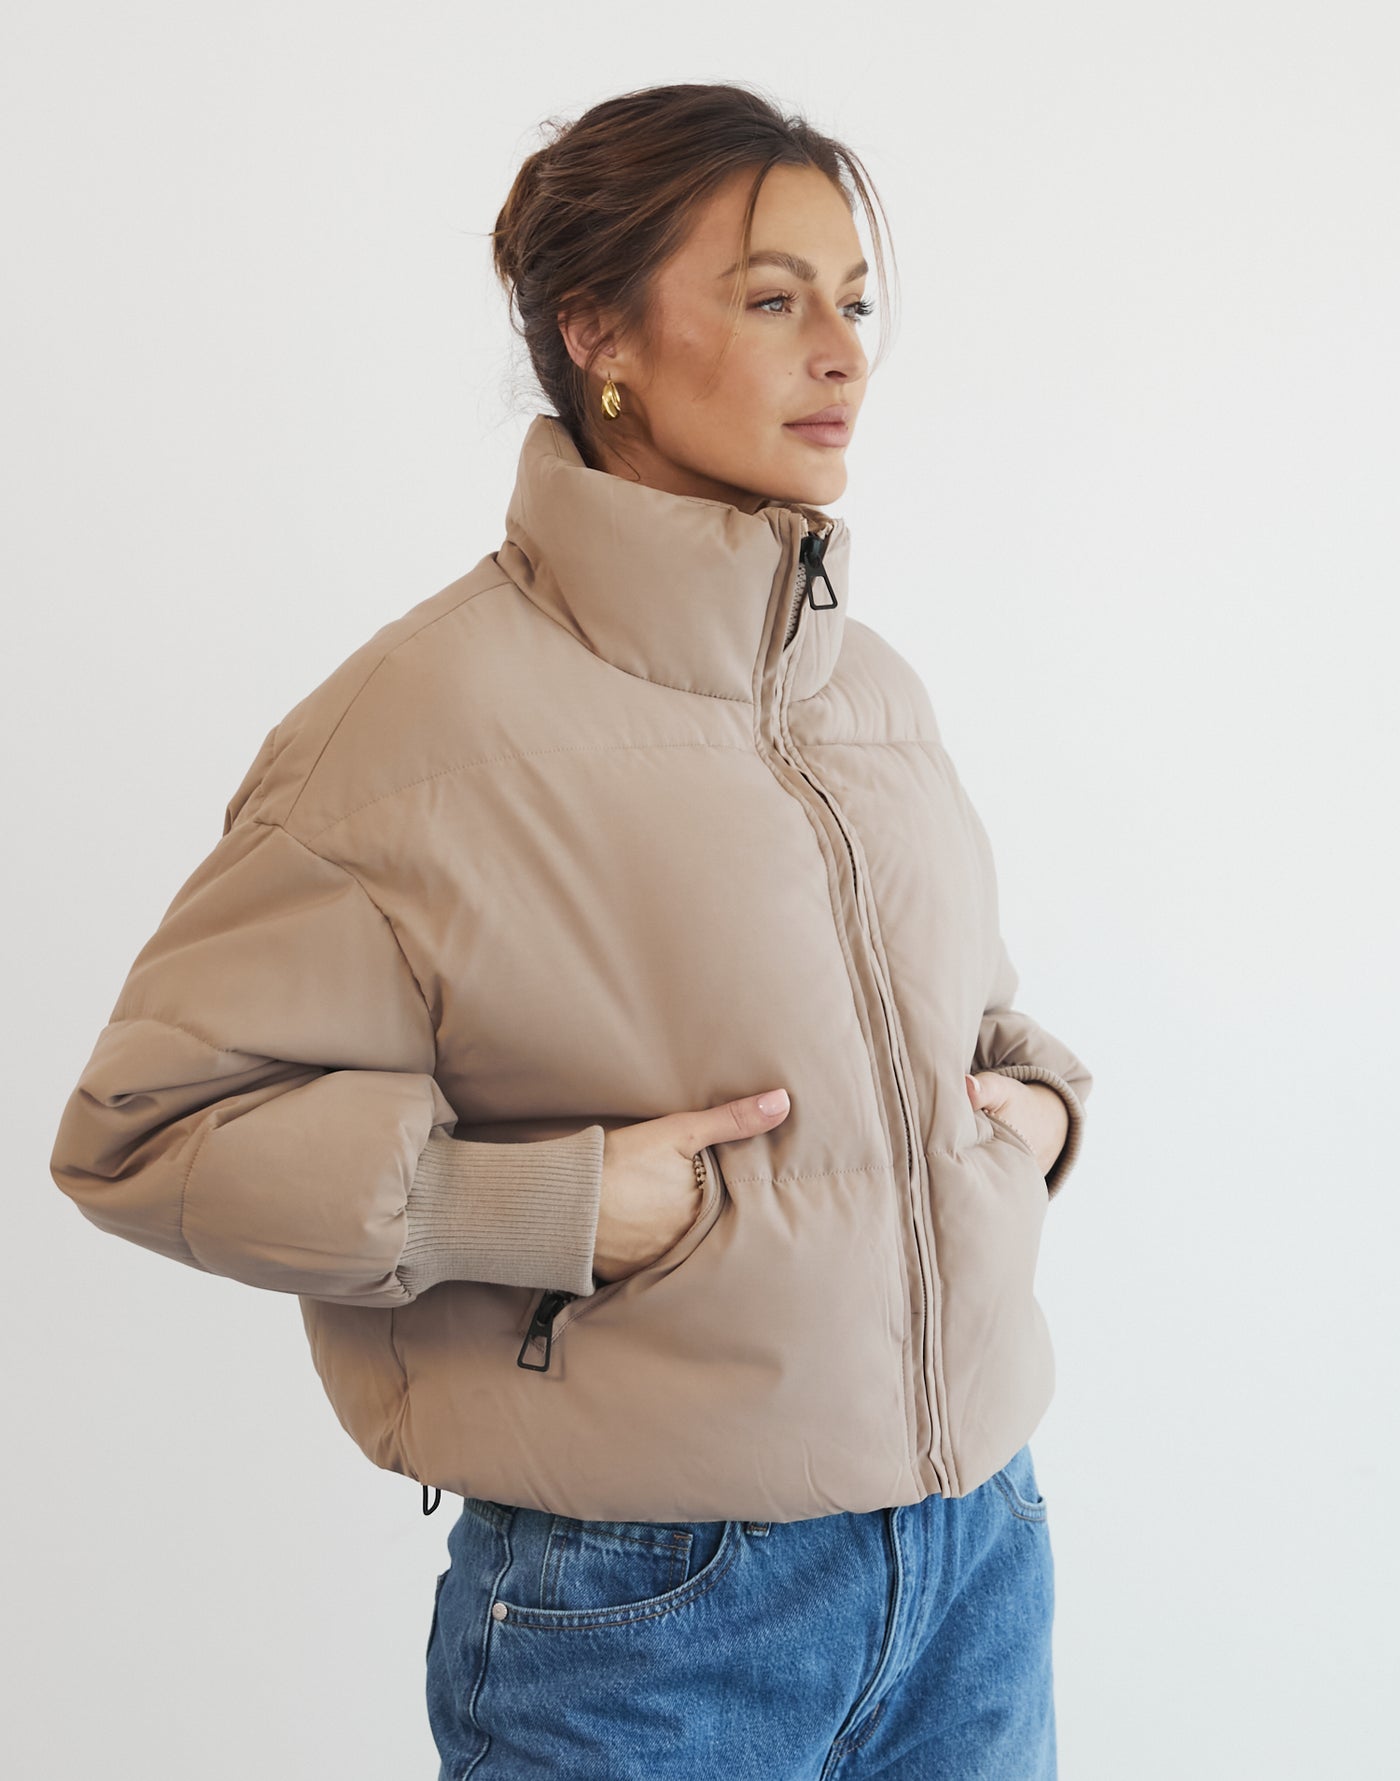 Louisiana Puffer Jacket (Latte) - Neutral Brown Long Sleeve Jacket - Women's Outerwear - Charcoal Clothing